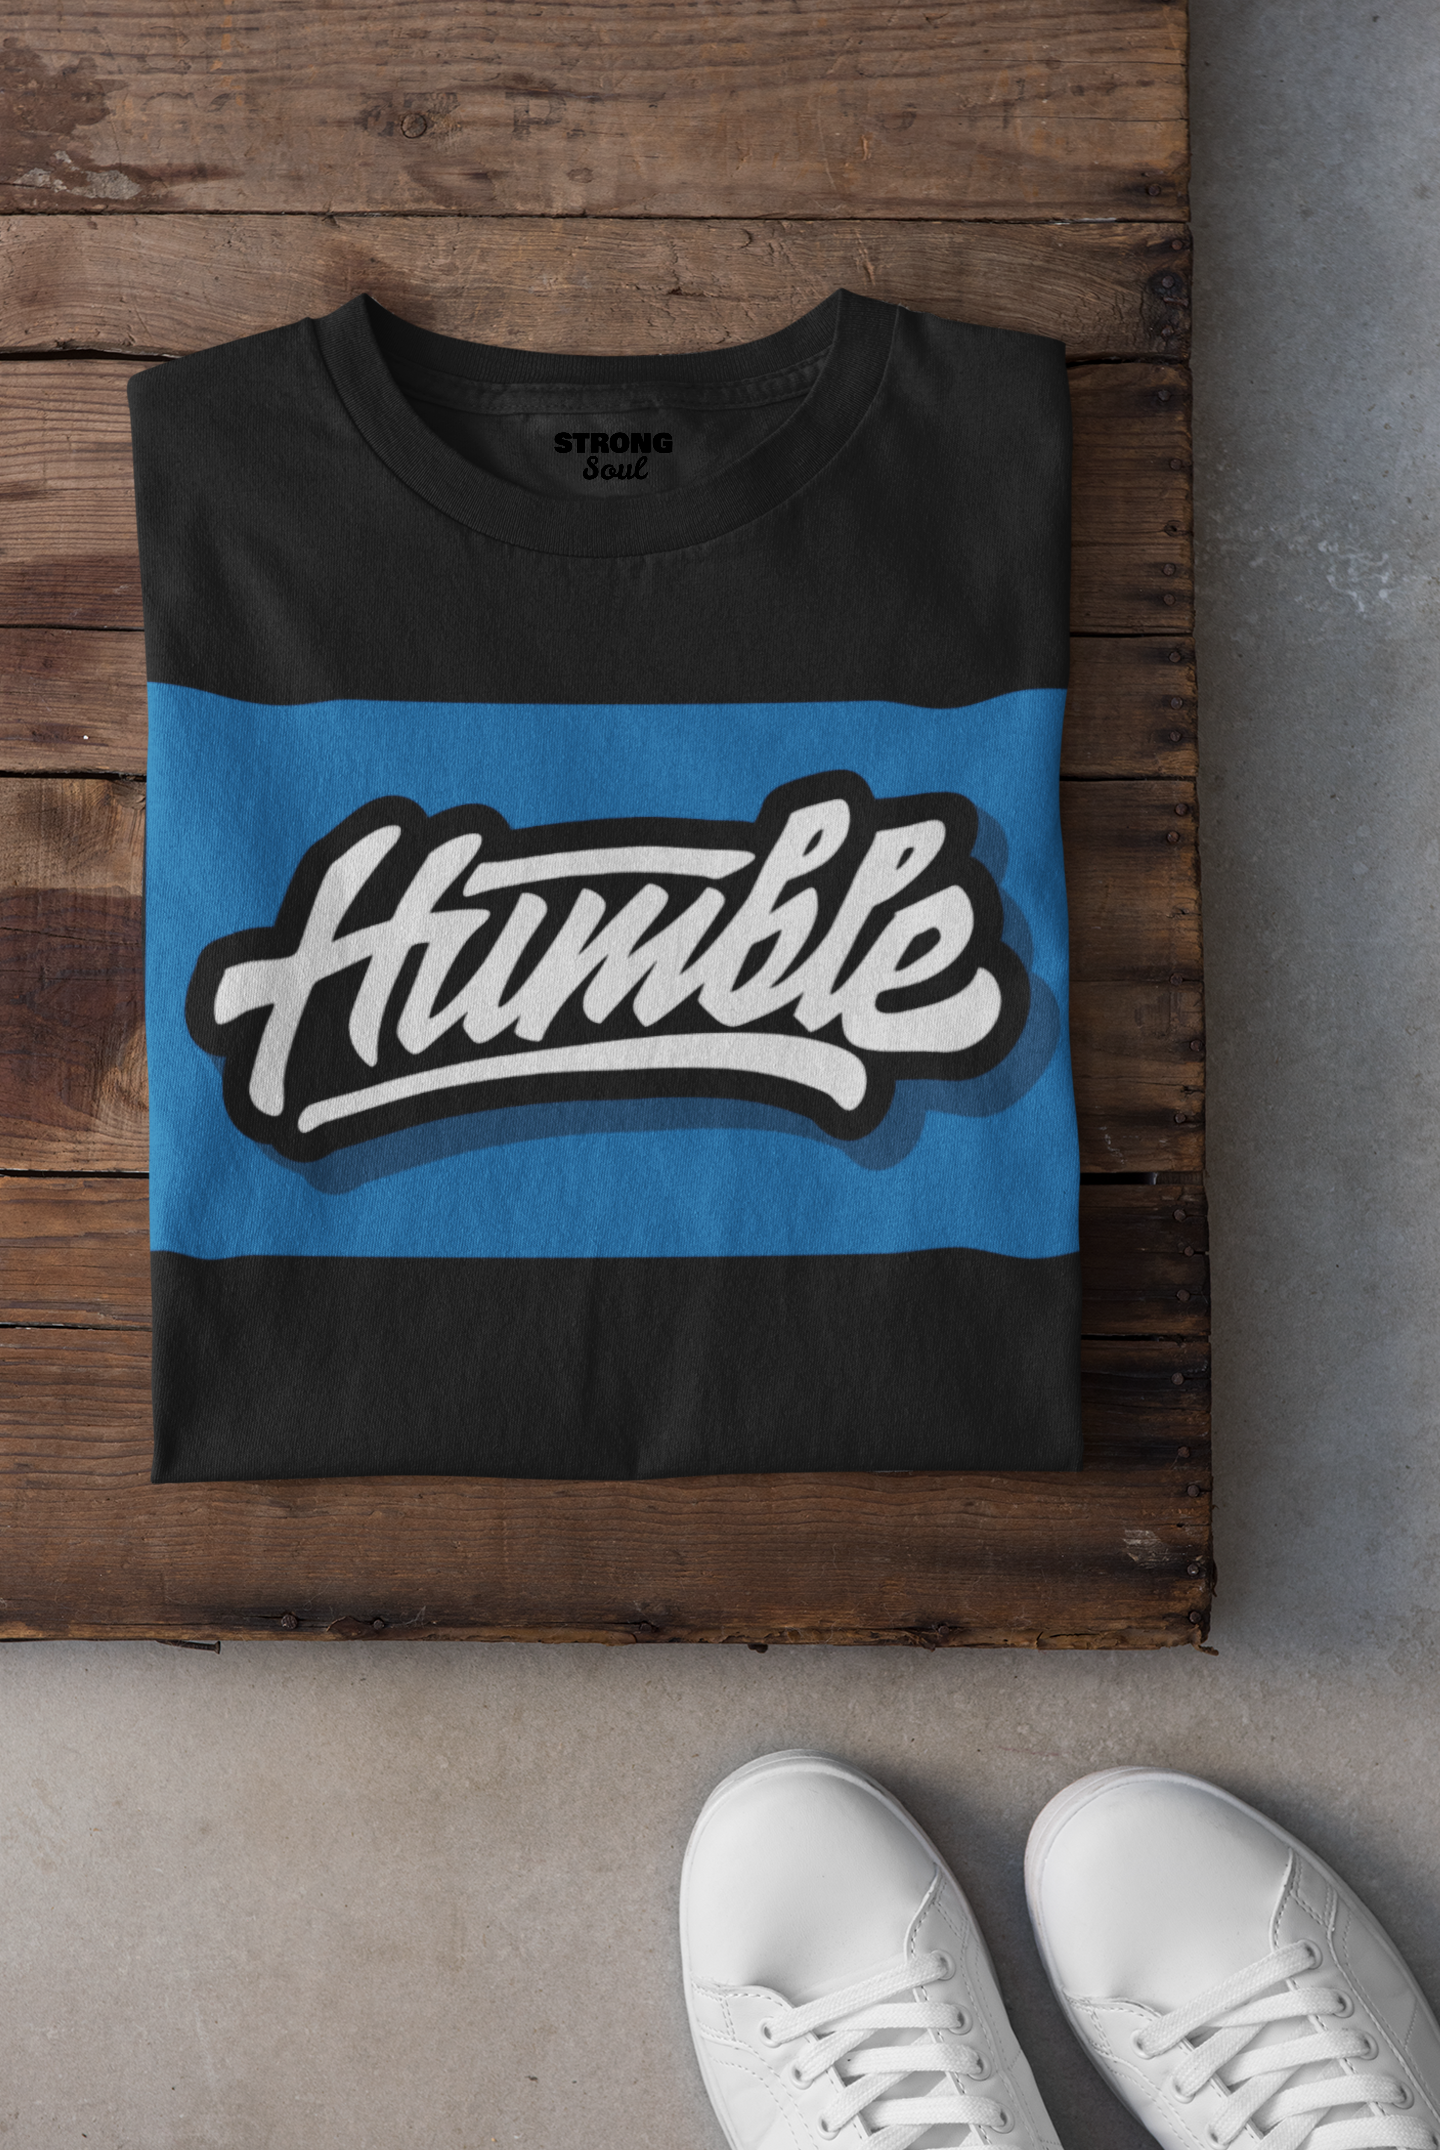 Humble Gym T Shirt Strong Soul Shirts & Tops